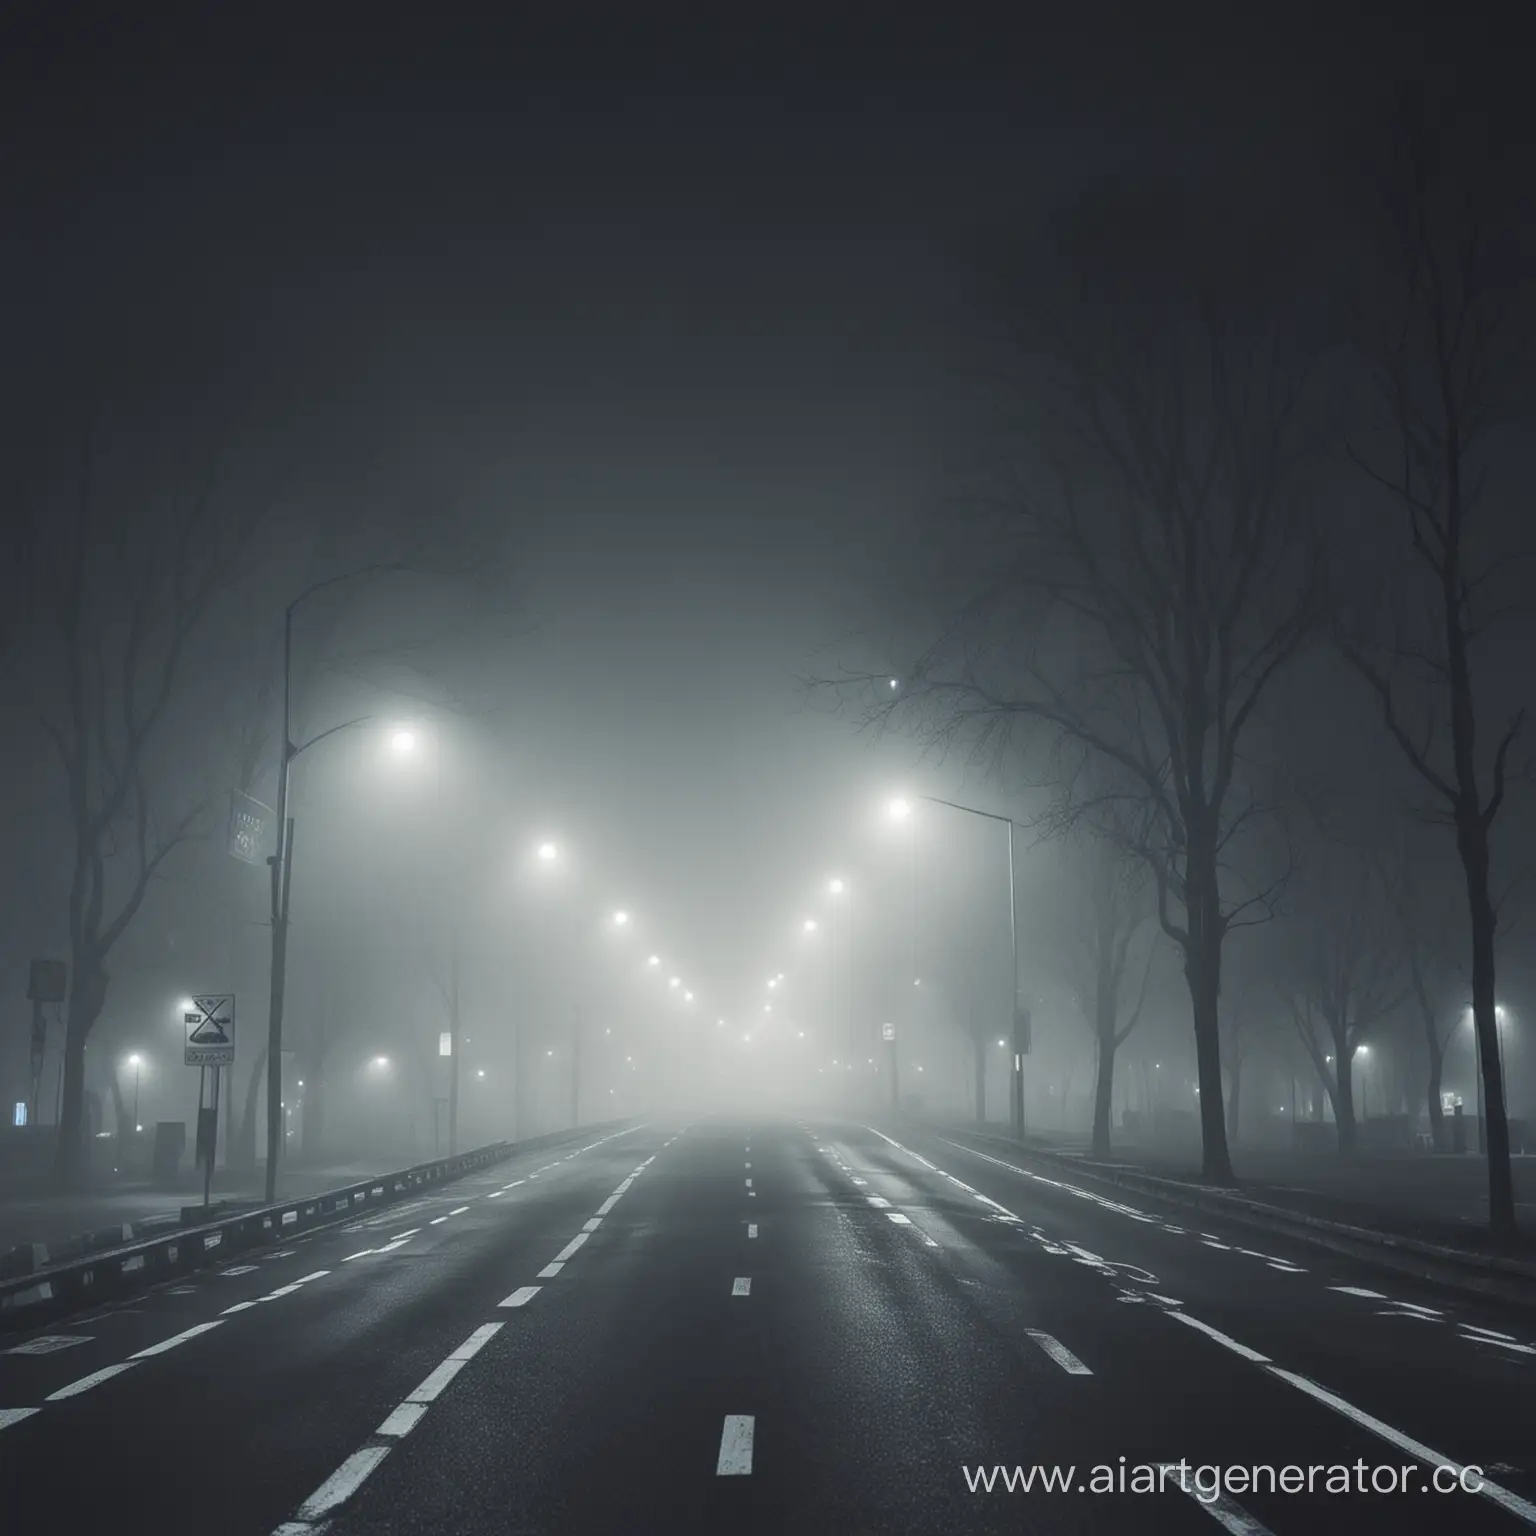 Urban-Night-Scene-Foggy-Road-in-the-Darkness